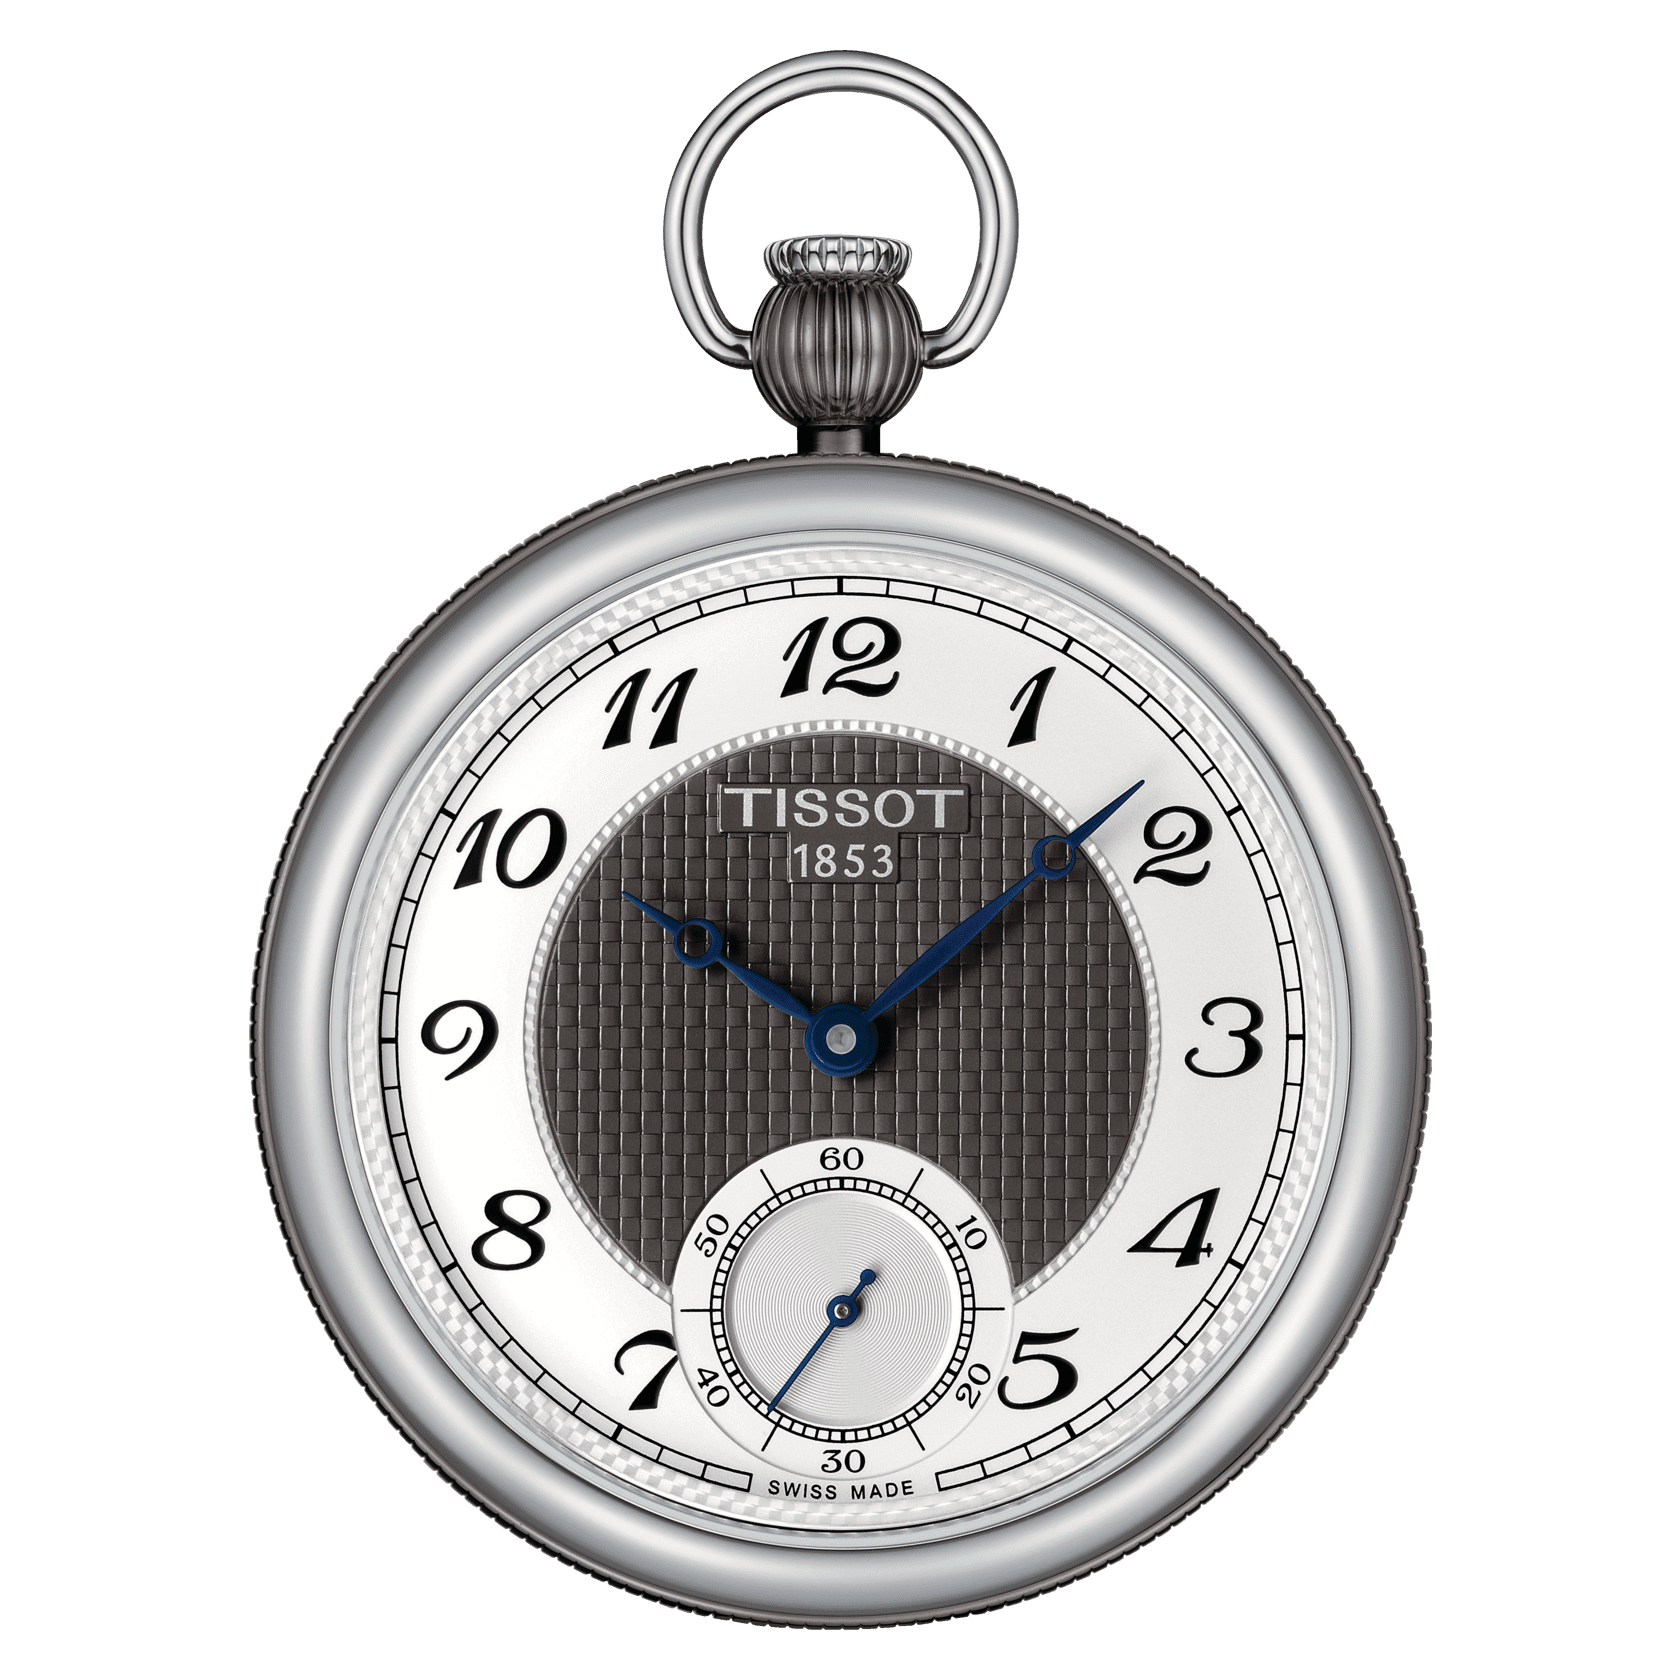 Authentic Soviet Watch Replica